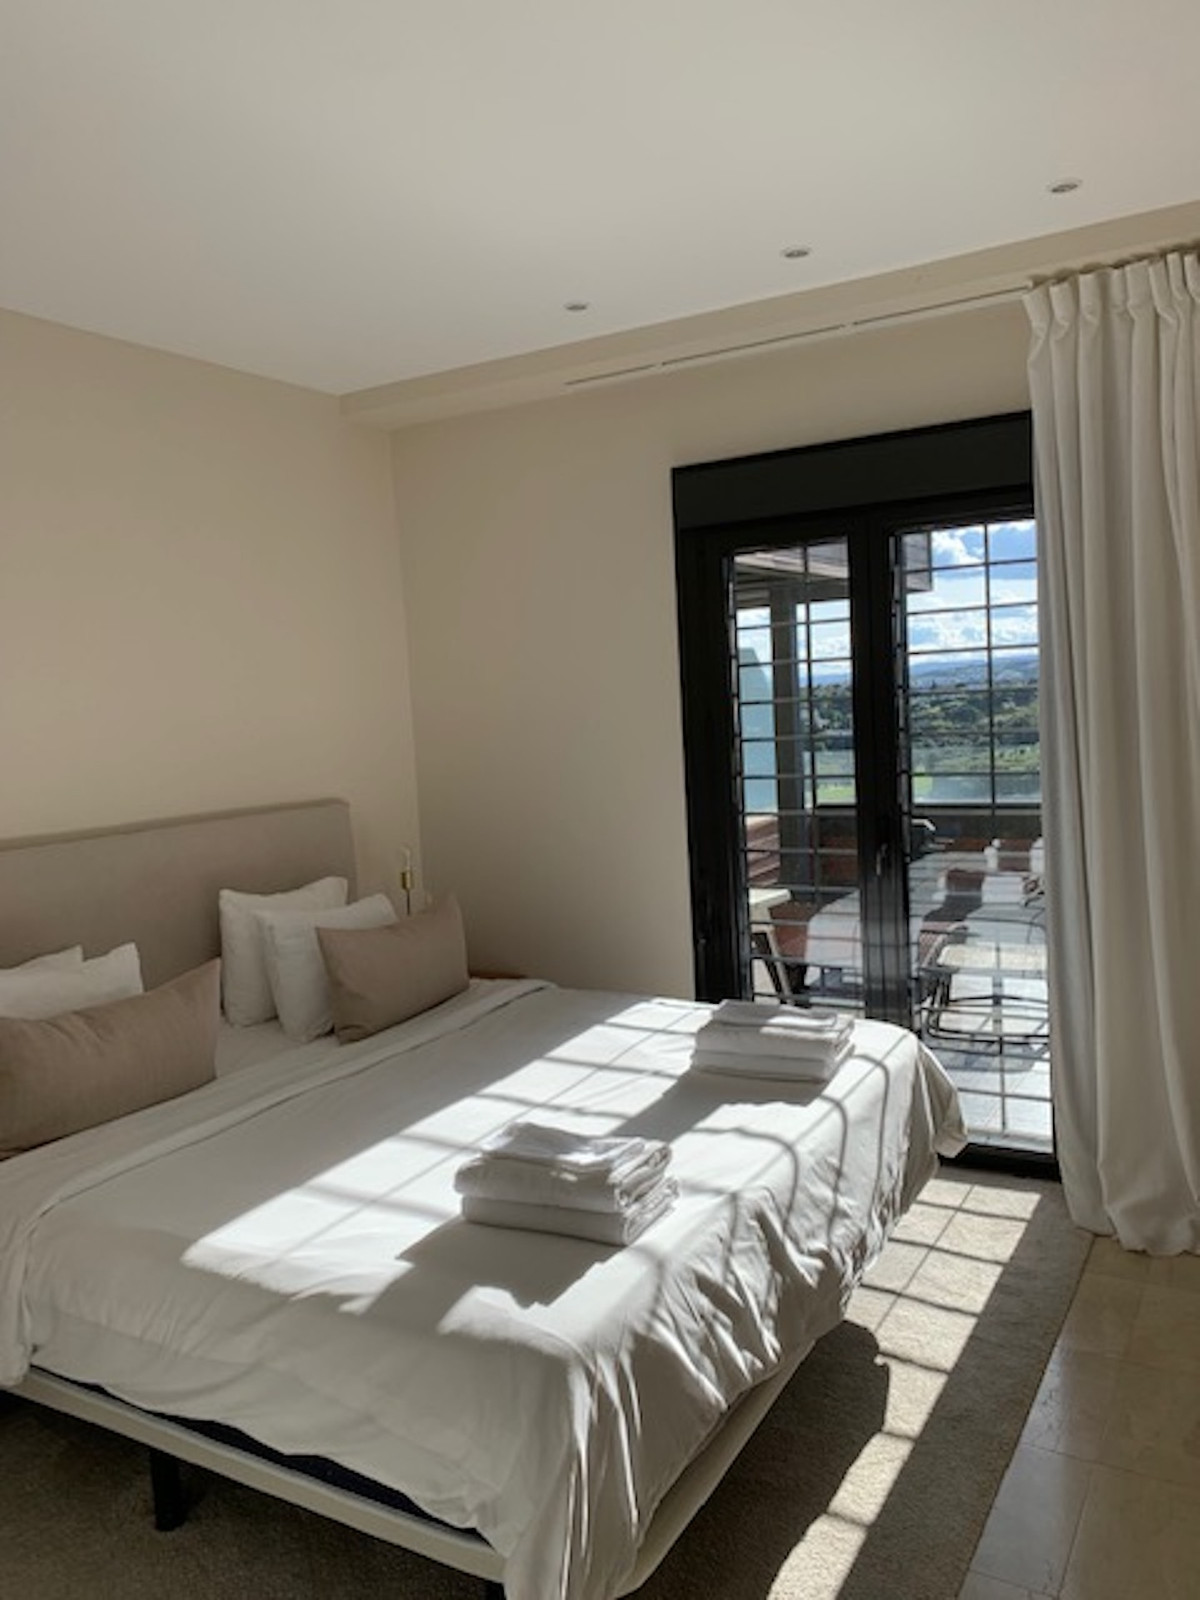 2 bedroom Apartment For Sale in Los Flamingos, Málaga - thumb 9